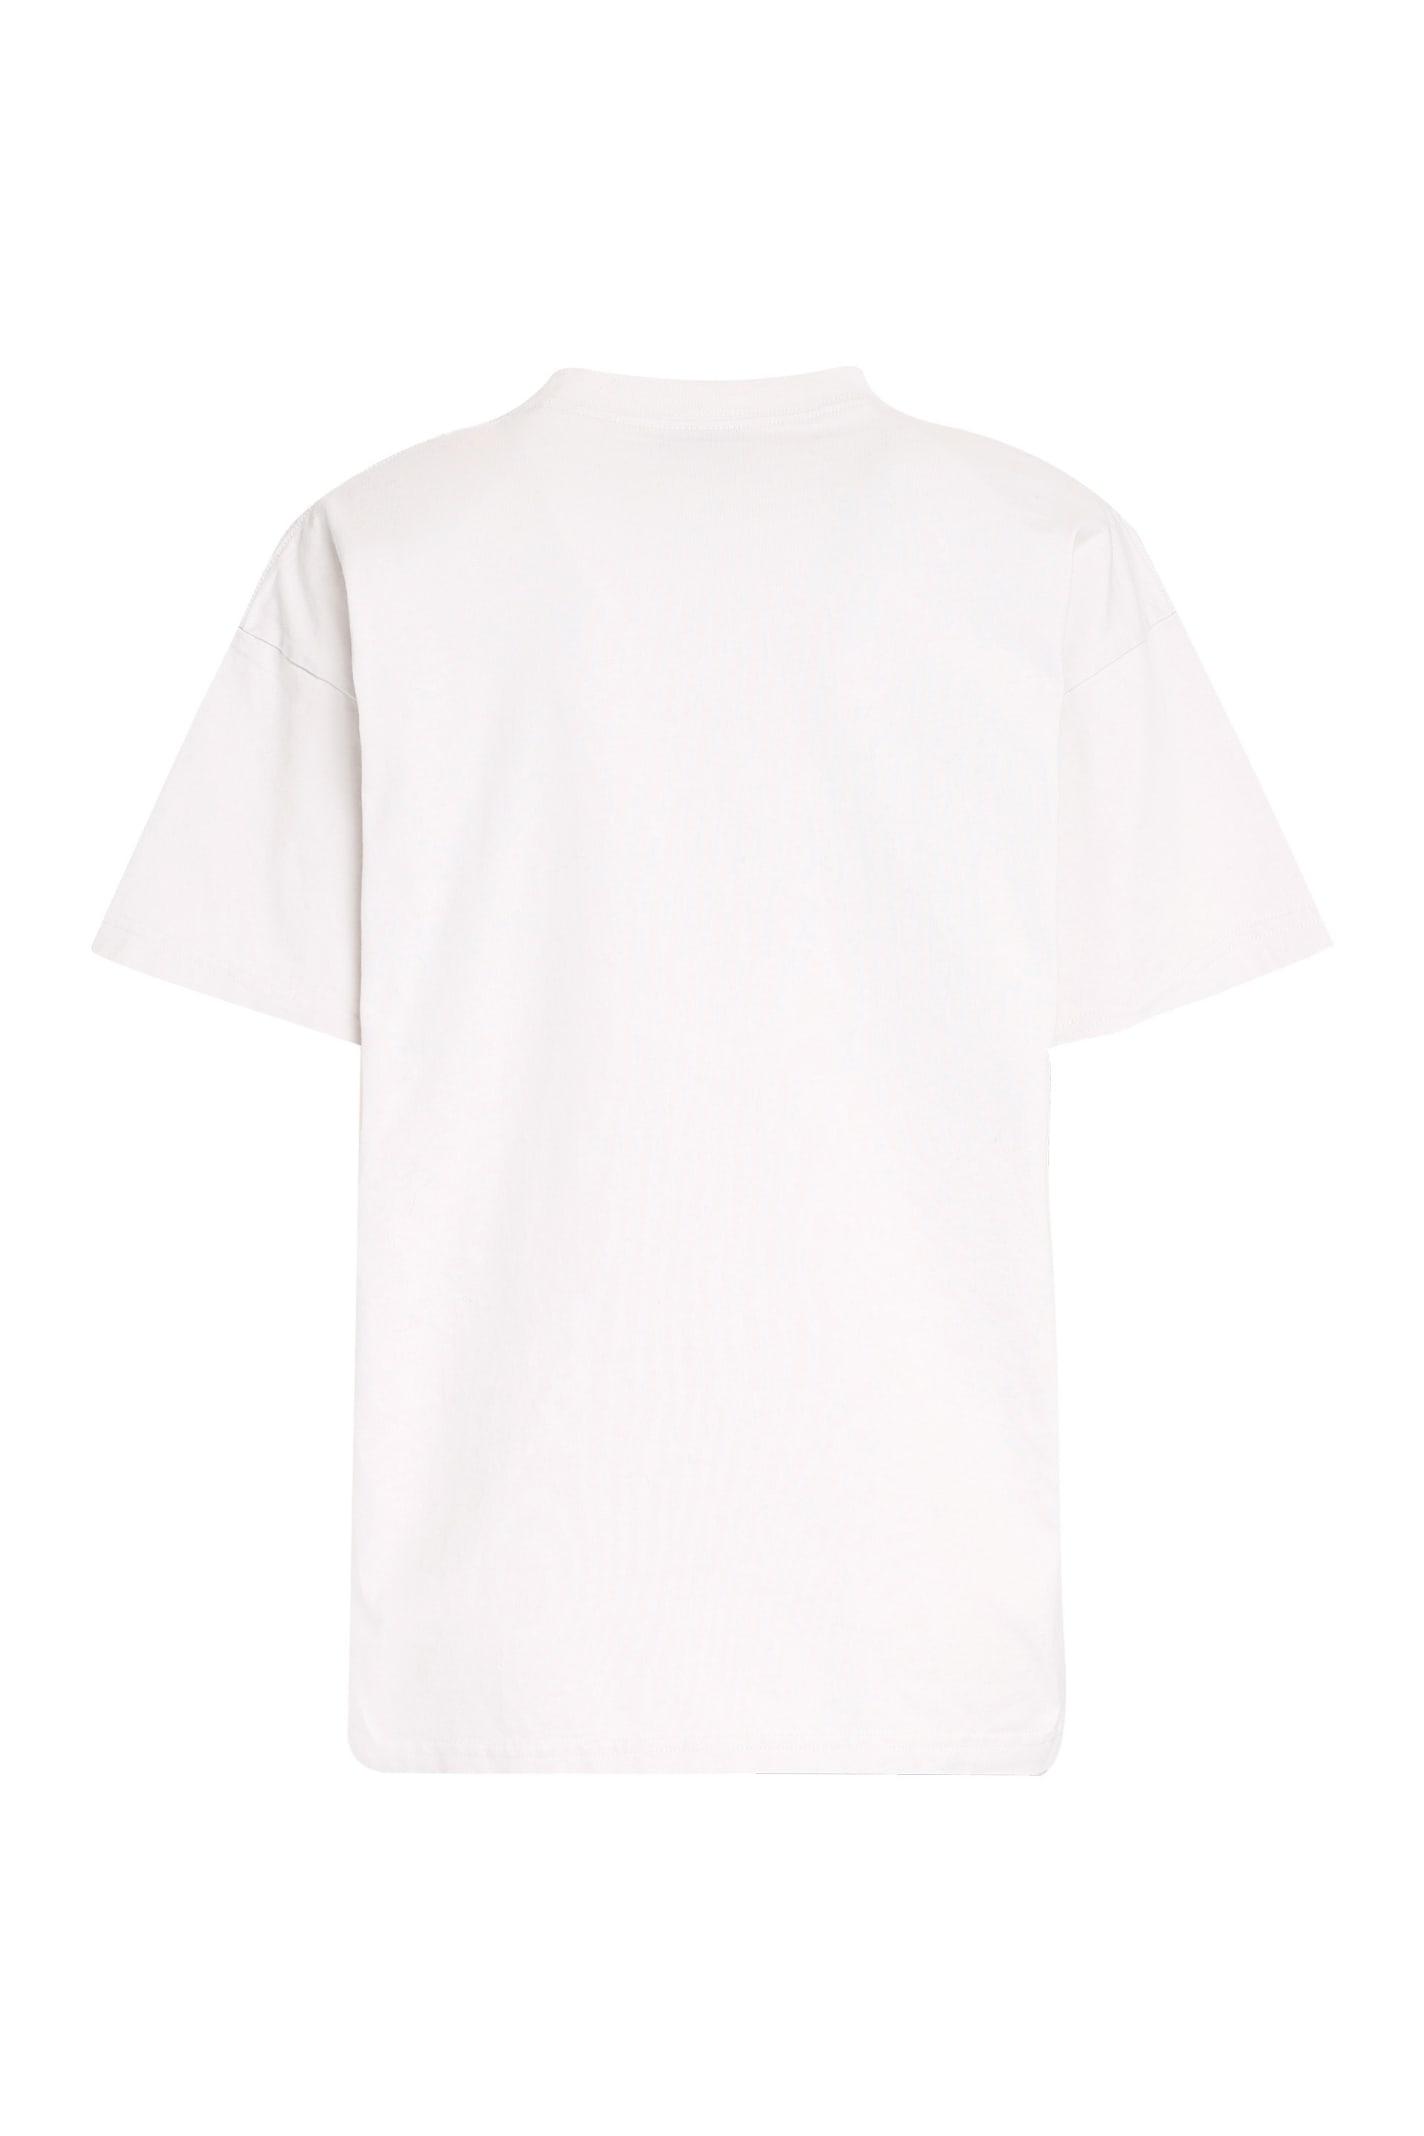 Balenciaga Logo Cotton T-shirt in White | Lyst